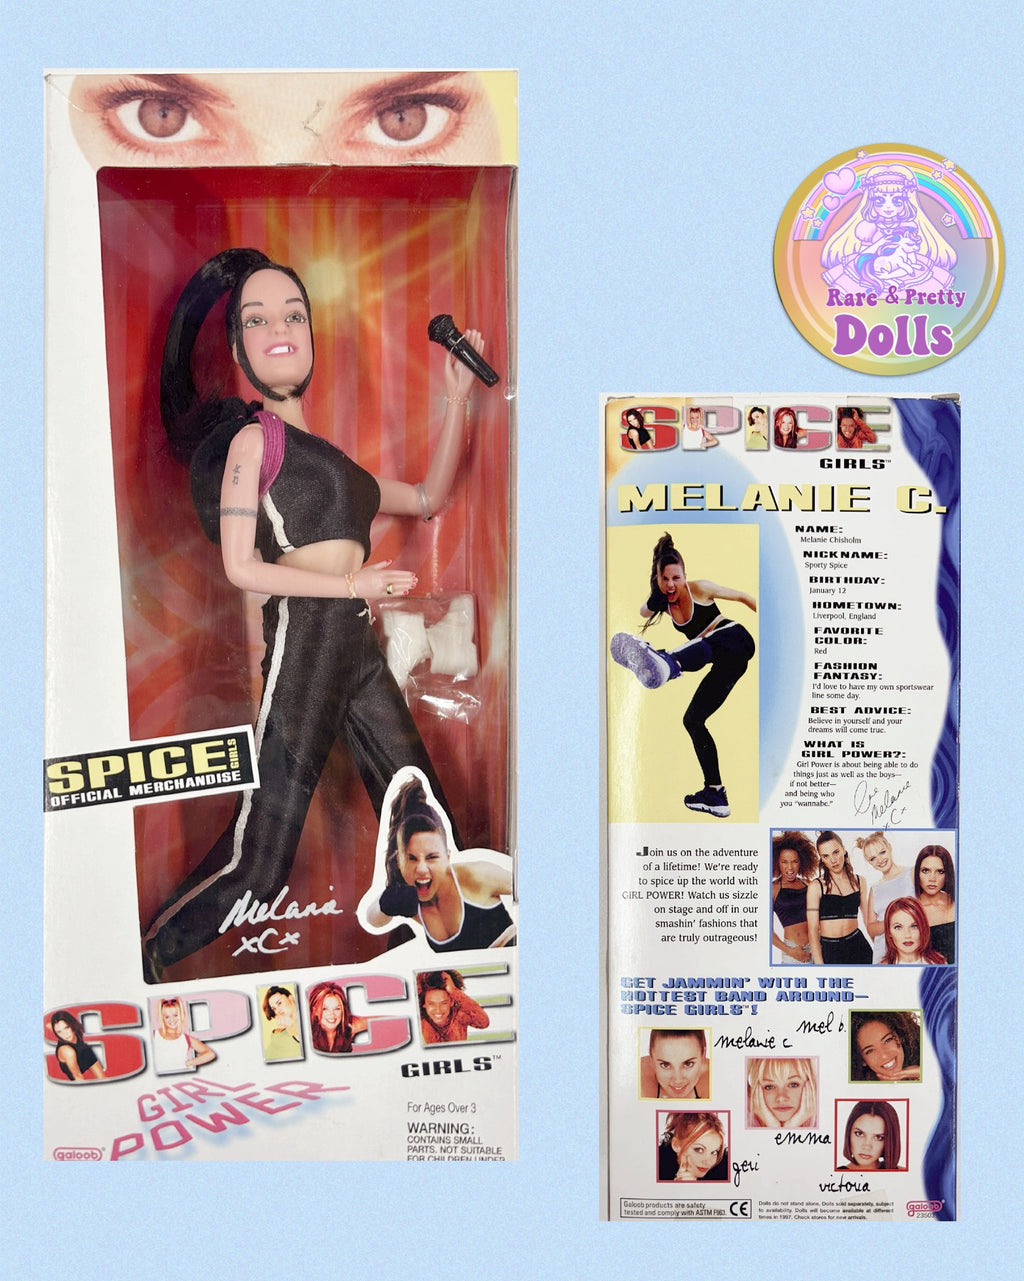 Spice Girl - Sporty